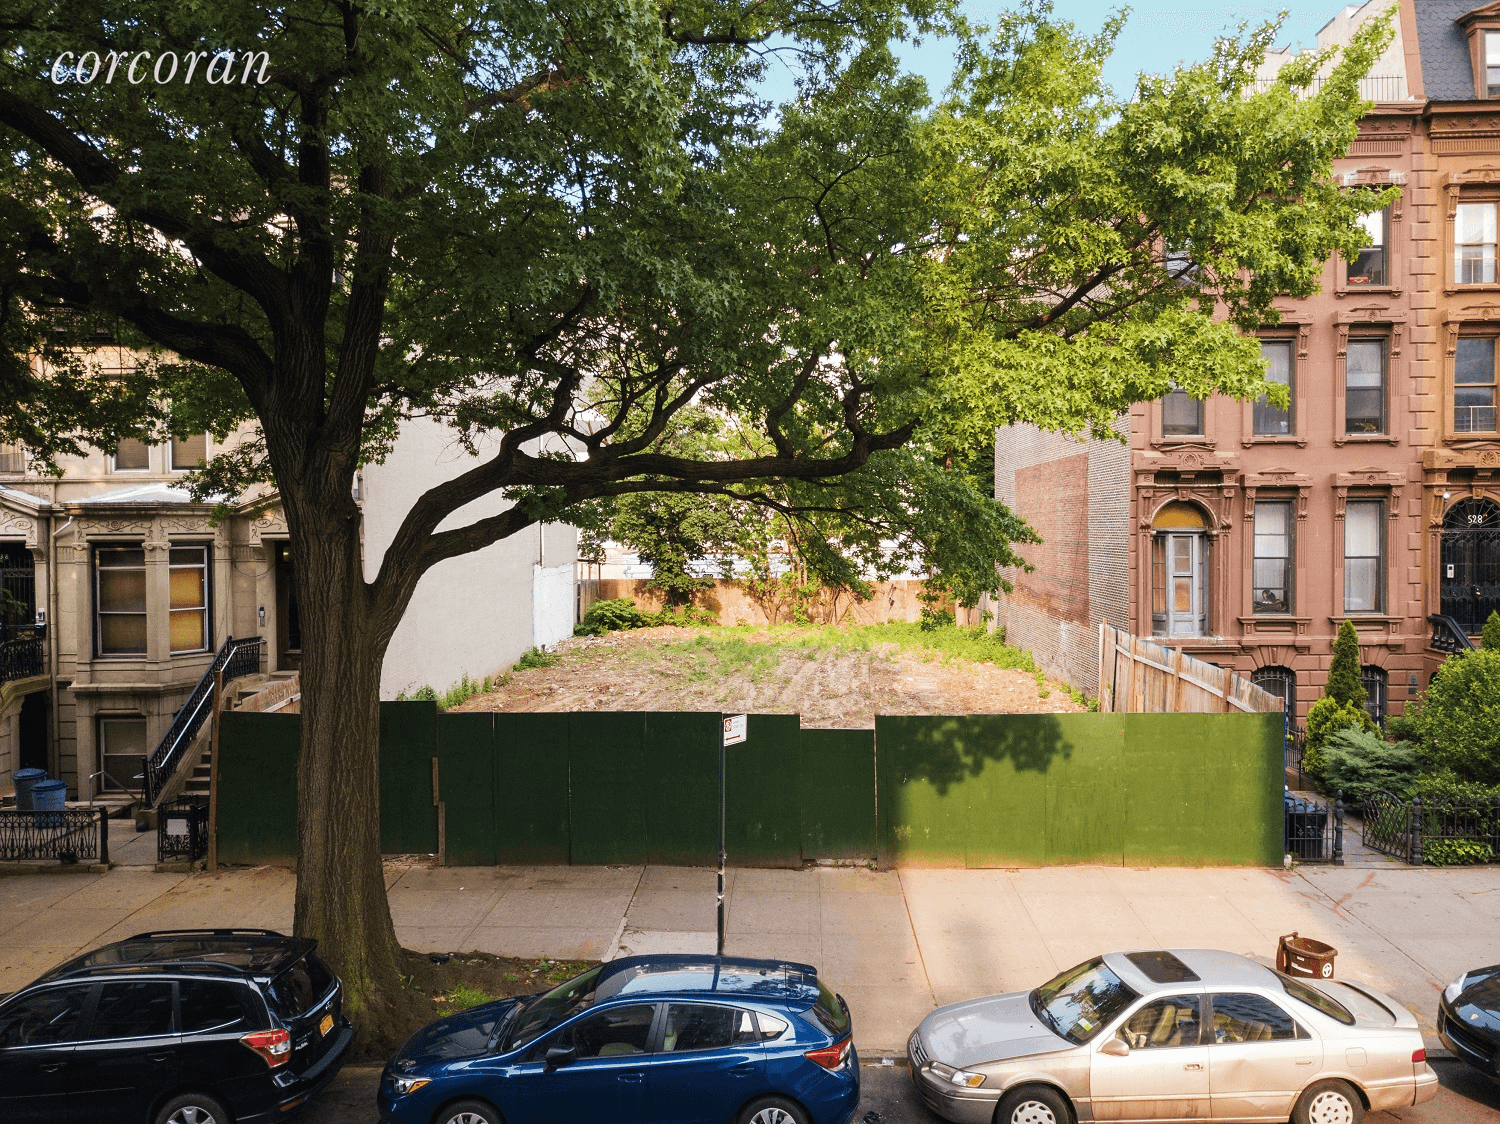 532 Clinton Avenue is a medium sized development site in the heart of Clinton Hill, Brooklyn.